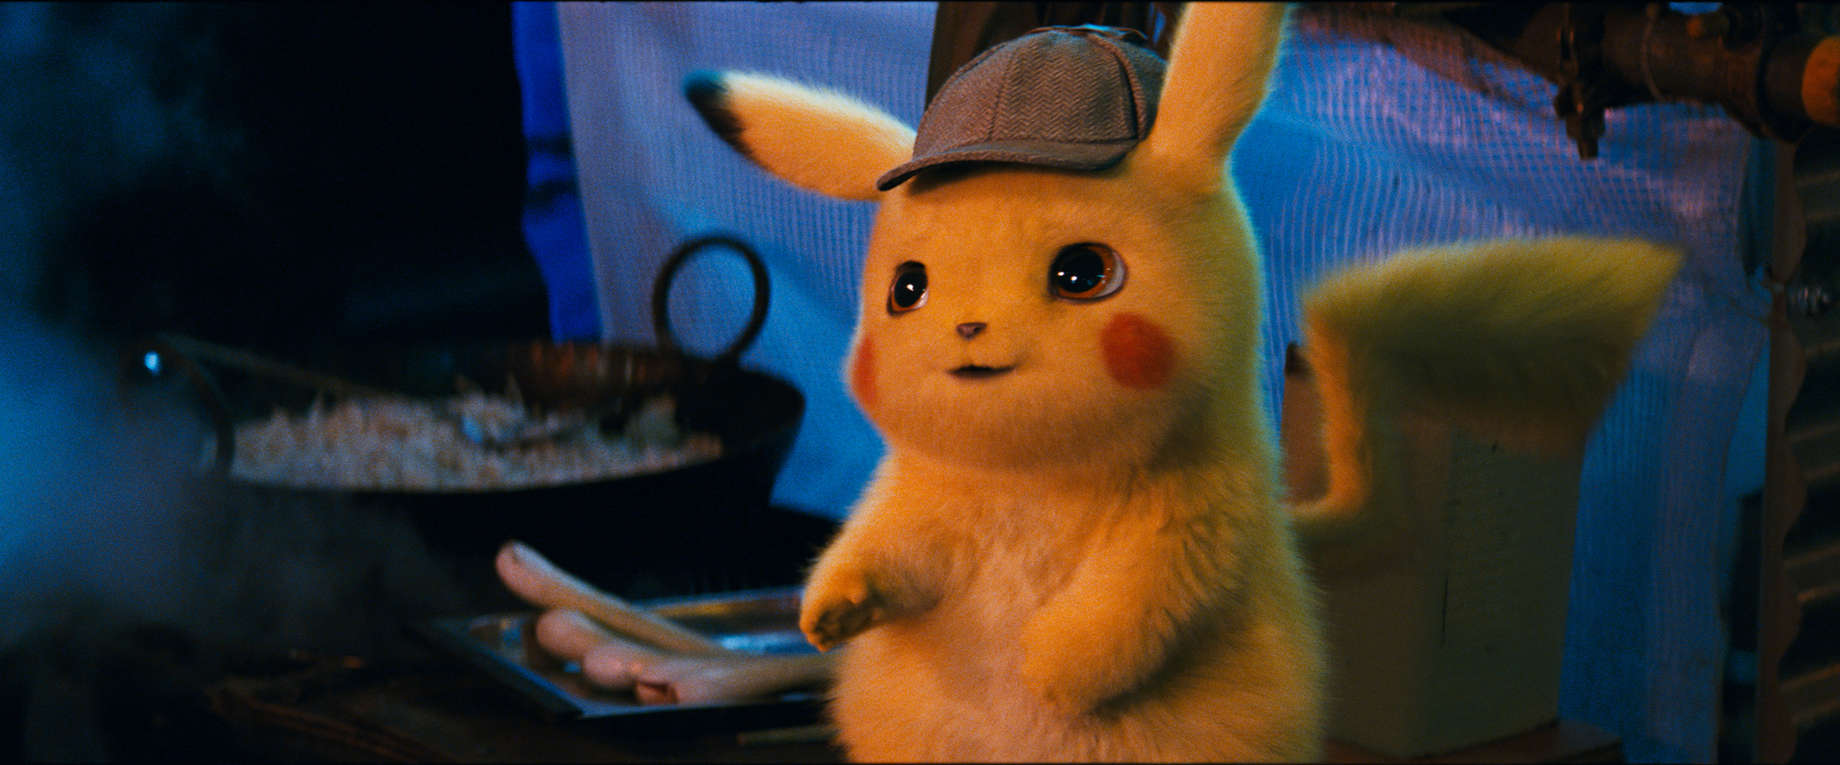 Pikachu voice actor